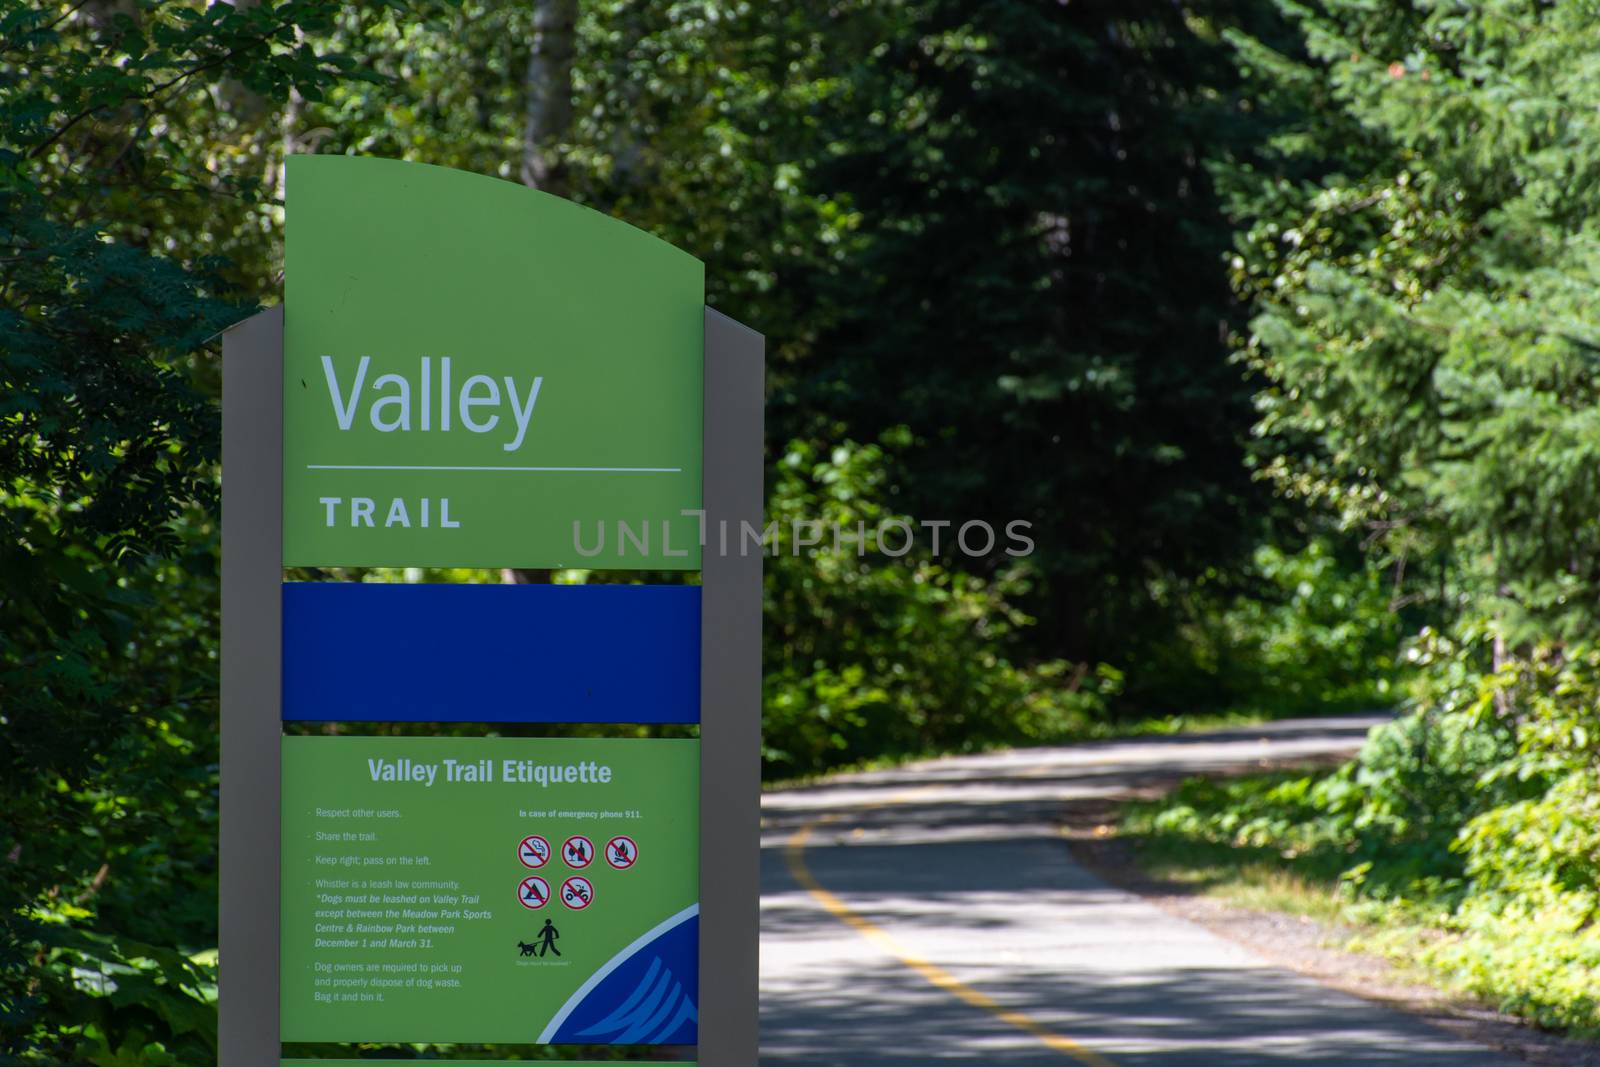 "Whistler, British Columbia/Canada - 08/07/2019:Valley Trail Sign in Whistler, British Columbia, Canada in the summer for biking, walking, running, rollerblading enjoying nature on the way to Whistler Village."